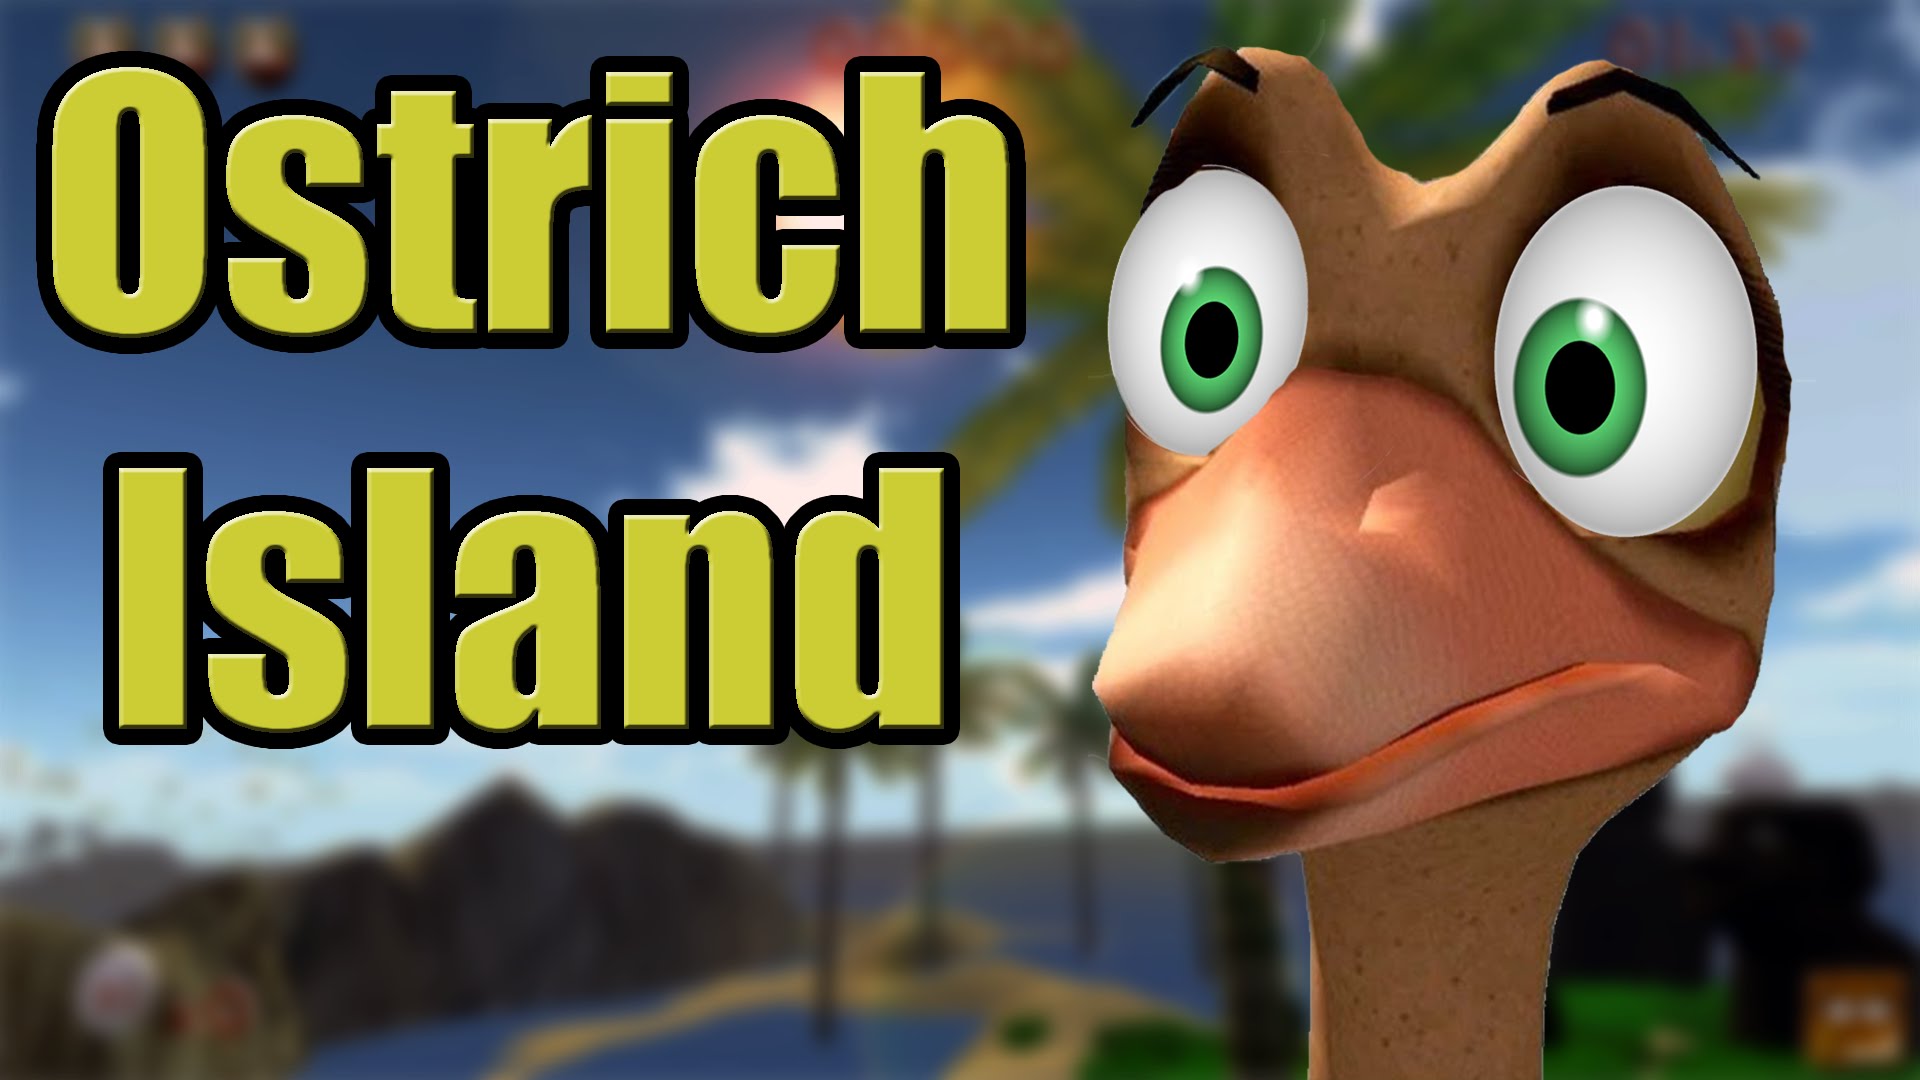 Ostrich Island #20